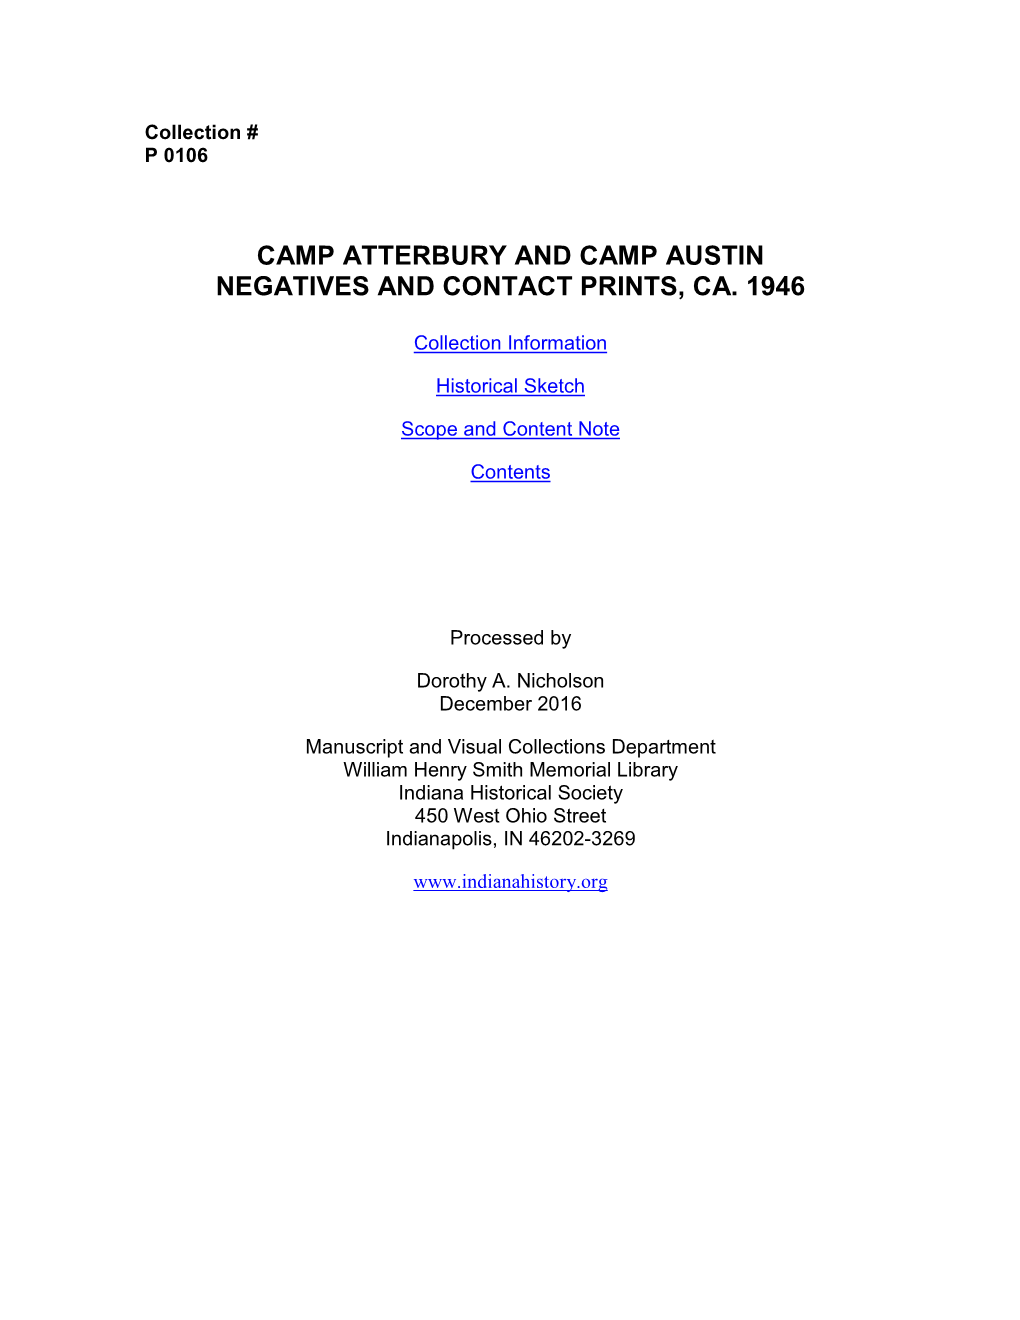 Camp Atterbury and Camp Austin Negatives and Contact Prints, Ca